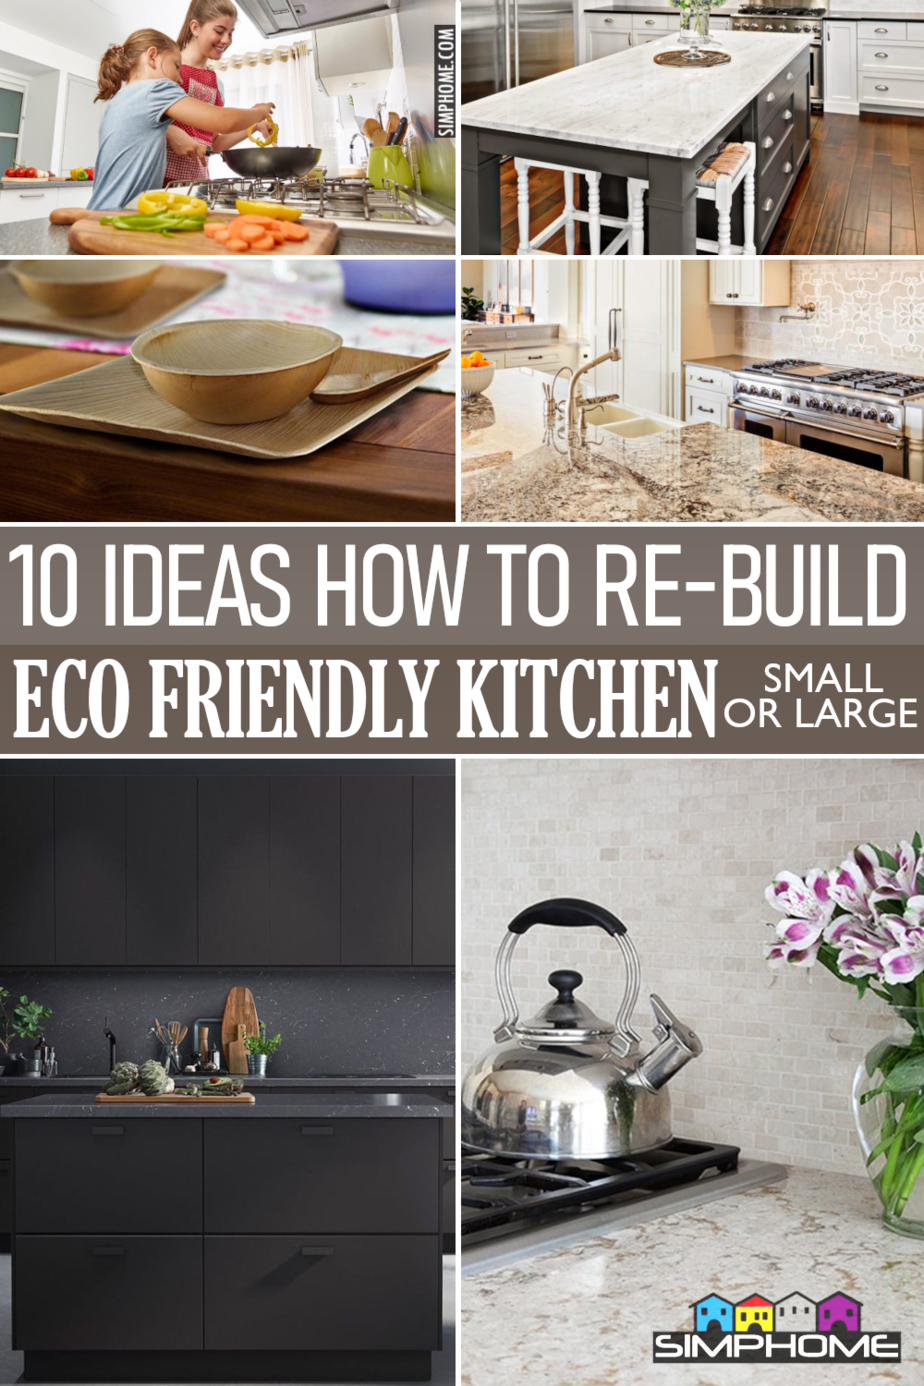 10 Ideas to Rebuild Eco Friendly Kitchen via Simphome.comFeatured